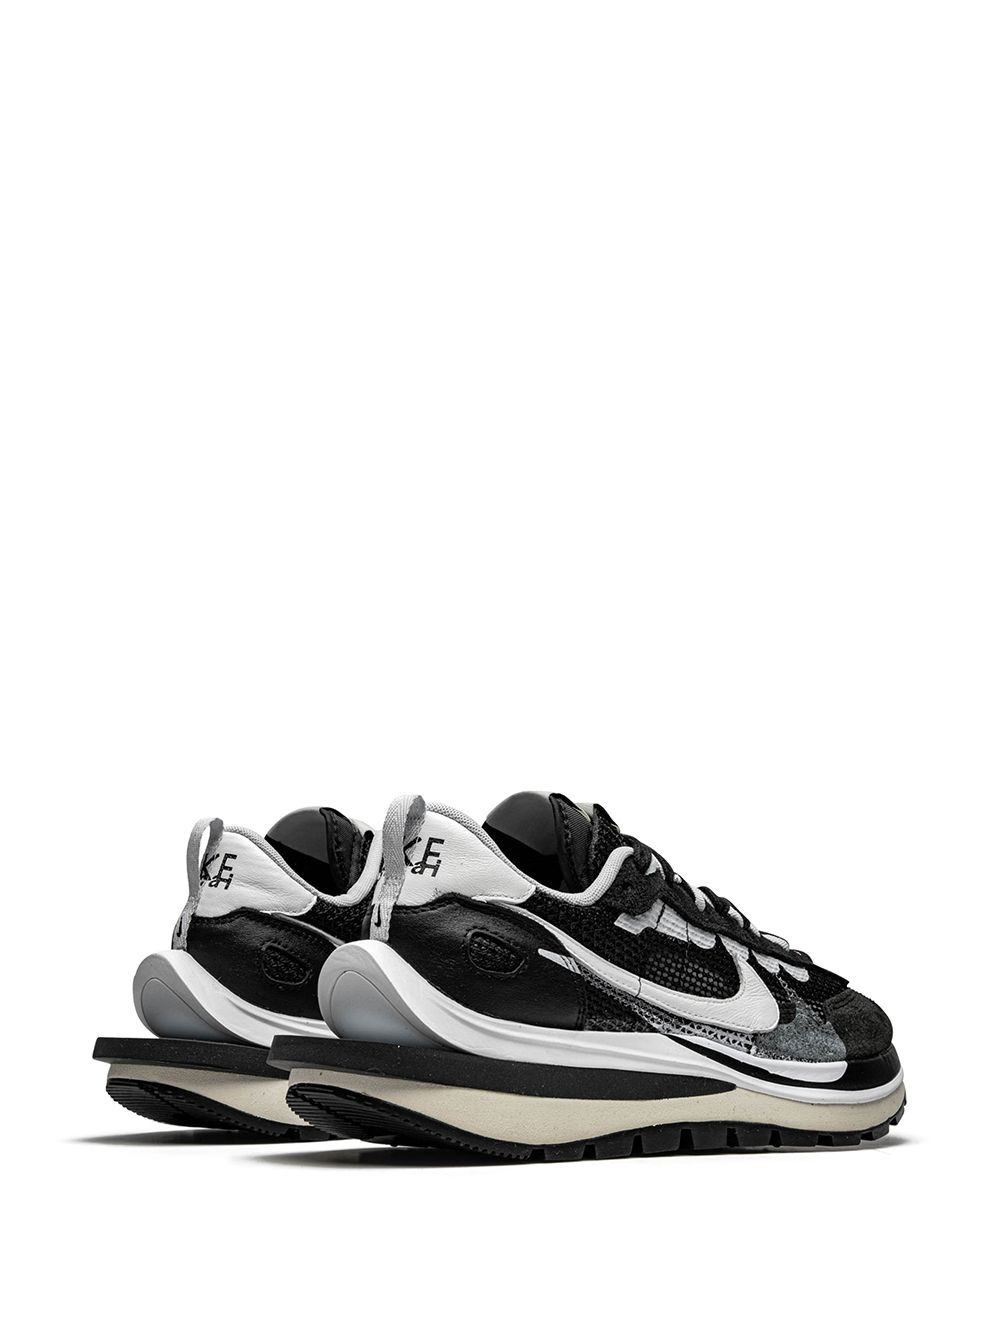 x sacai VaporWaffle "Black White" sneakers - 3